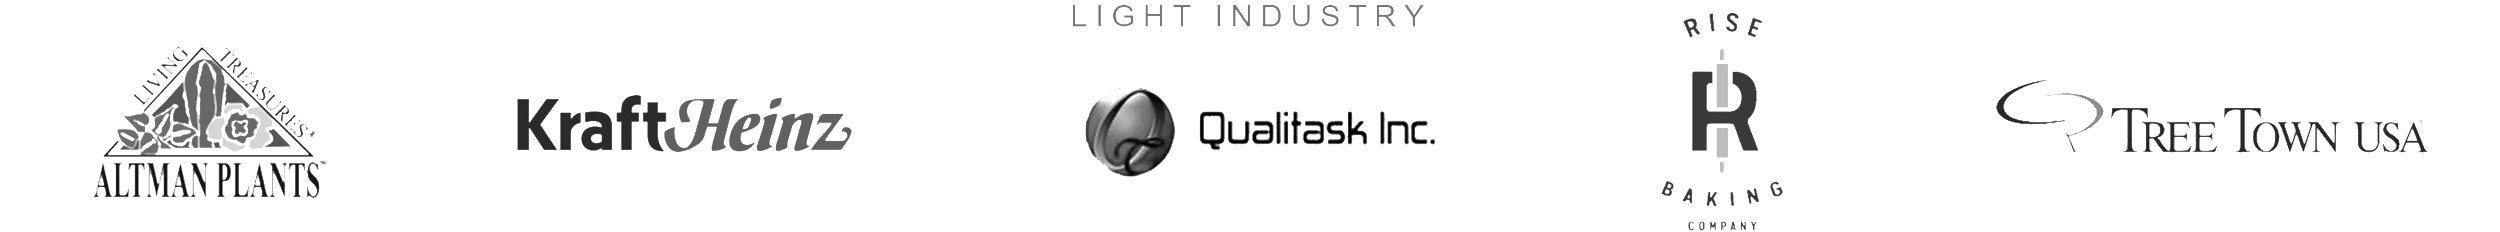 Light Industry: Altman Plants, KraftHeinz, Qualitask Inc., Rise Baking Company, and Tree Town USA Logos